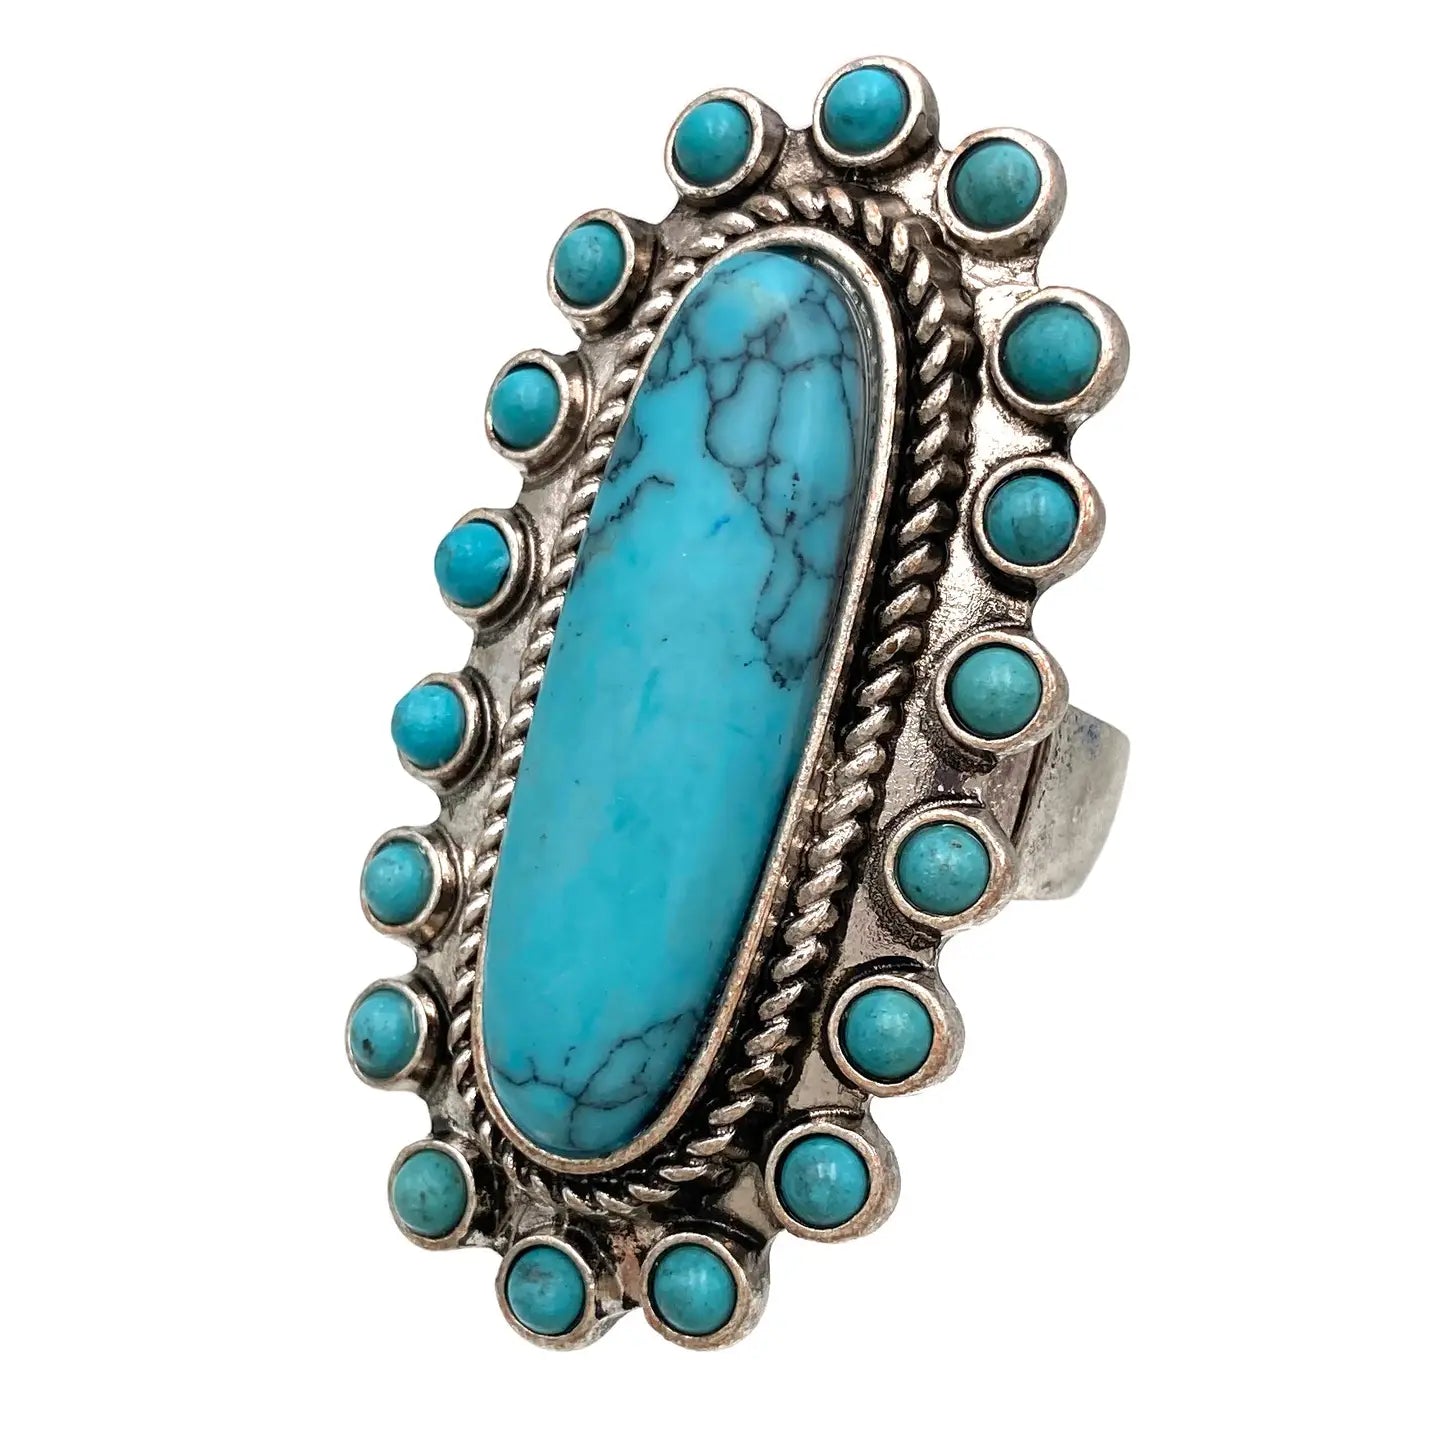 Long Turquoise Stone Cabochon Ring